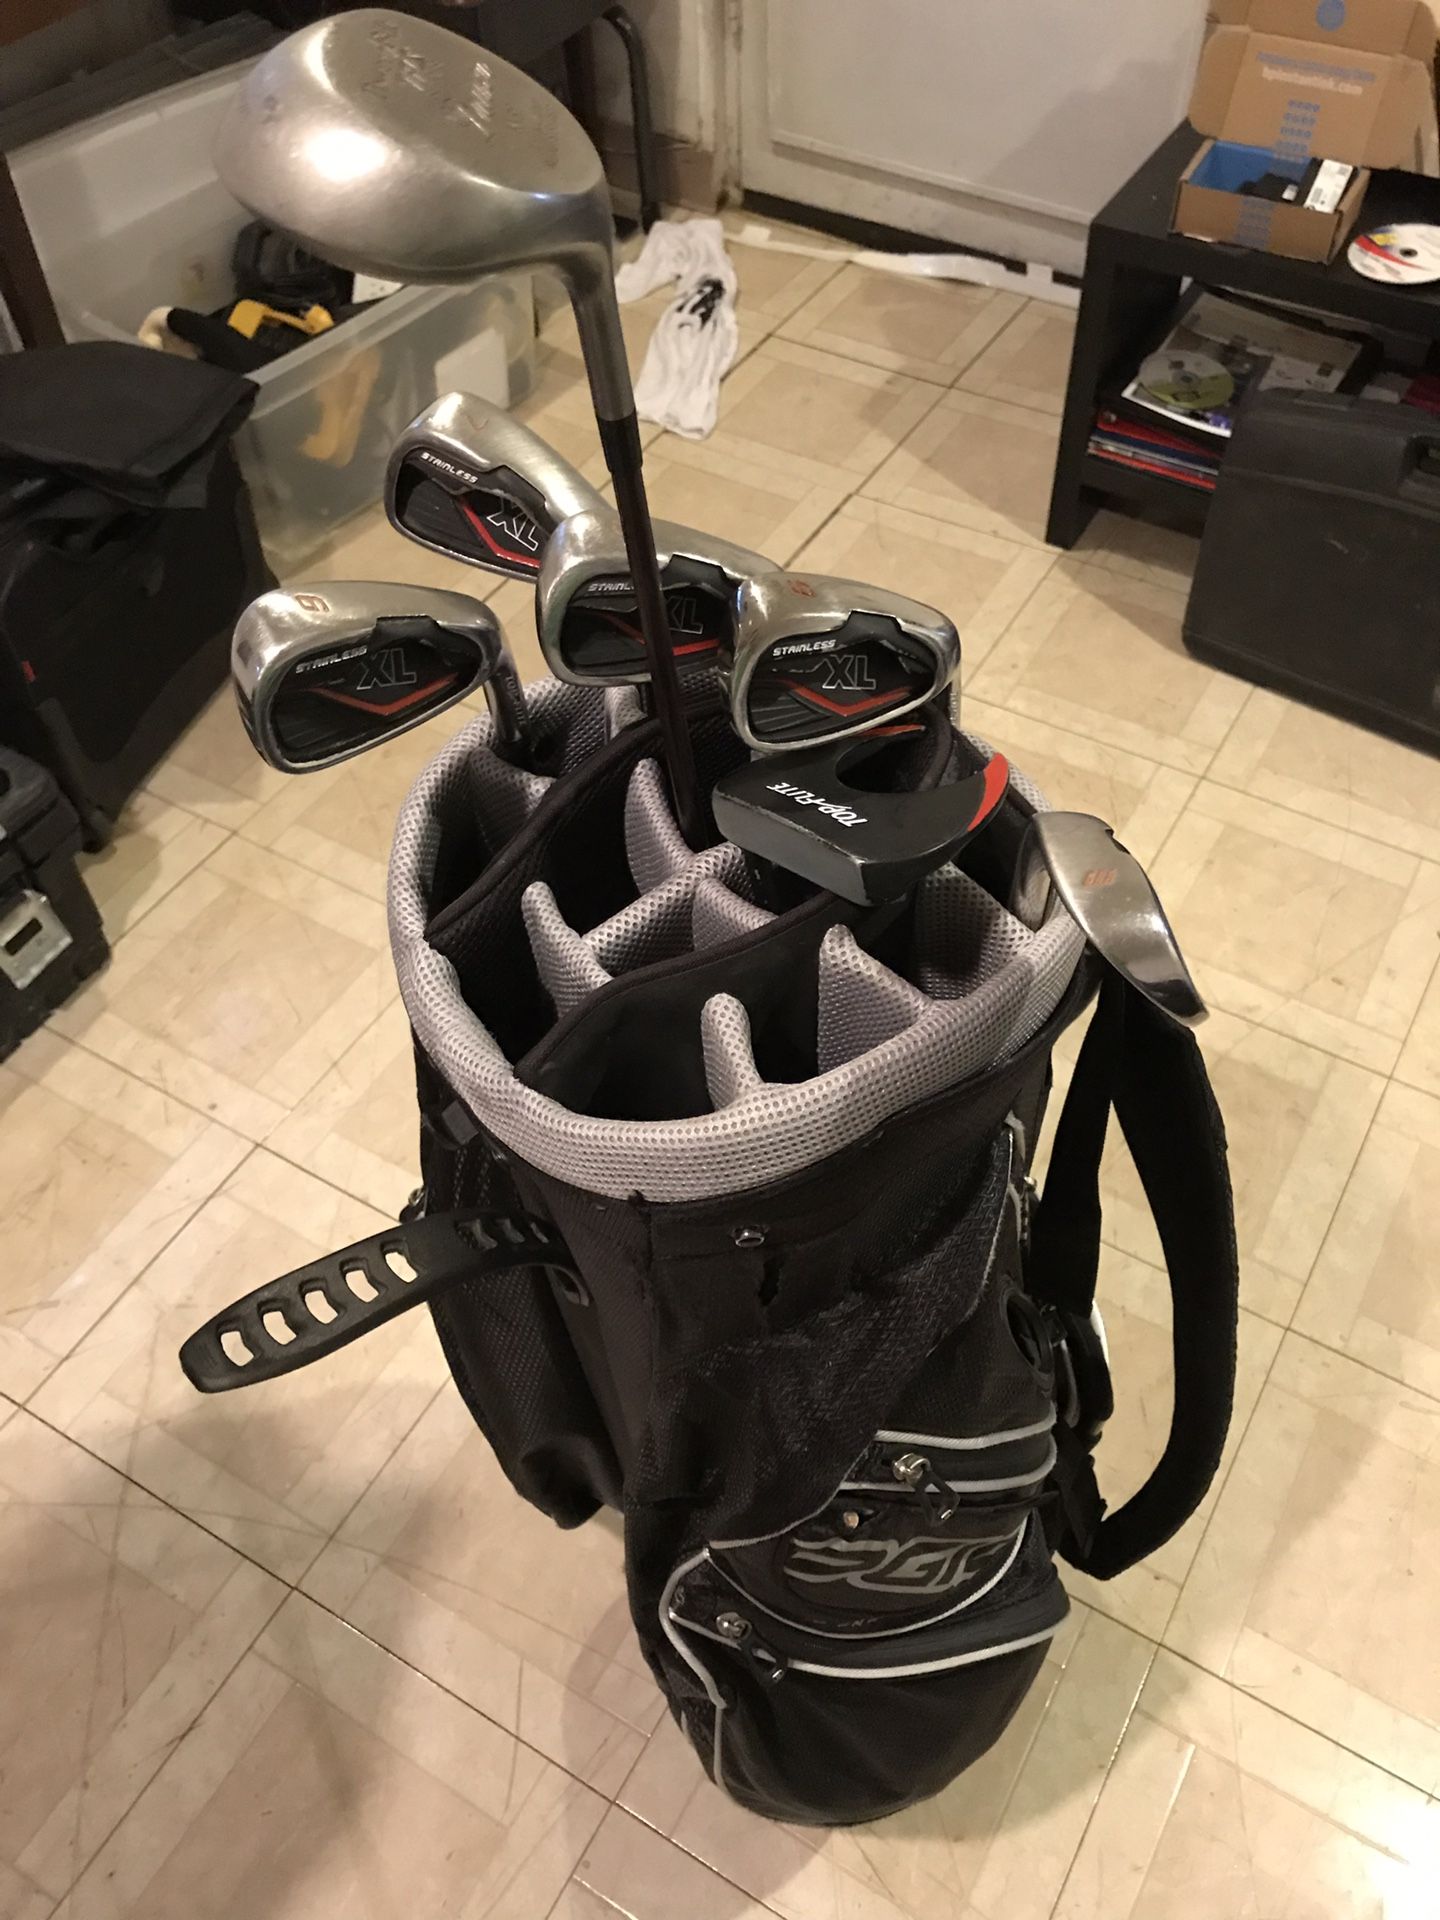 Used golf bag. Good for beginners set